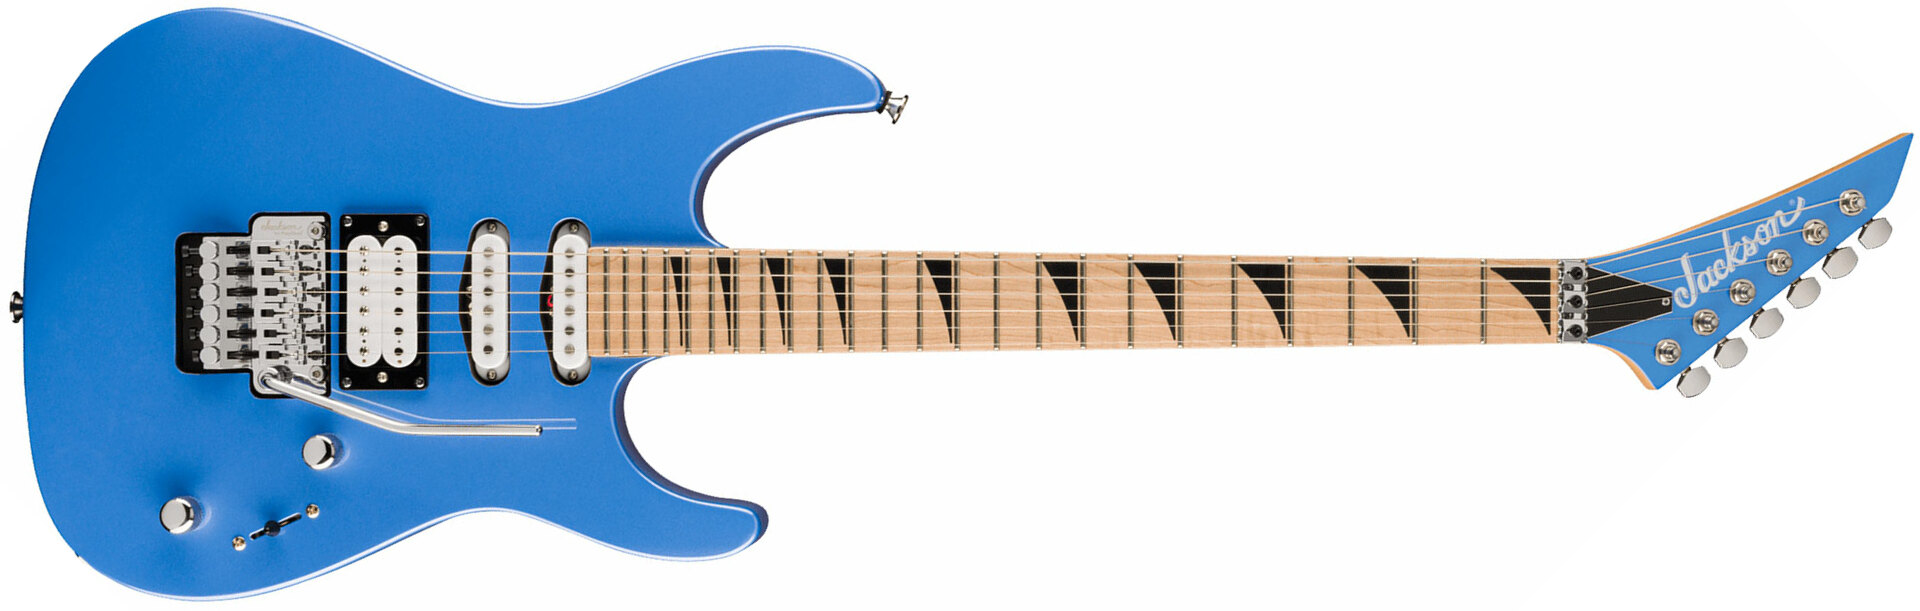 Jackson Dinky Dk3xr Hss Fr Mn - Frostbyte Blue - Str shape electric guitar - Main picture